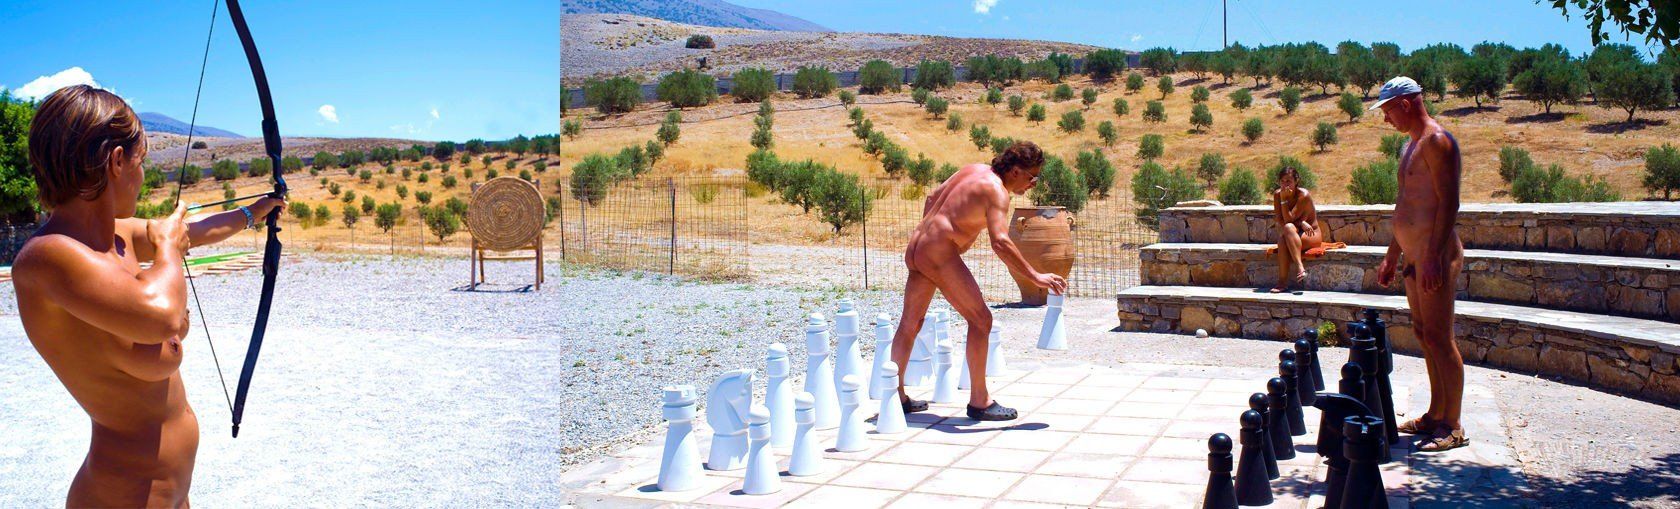 best of Camp pictures nudist Greek